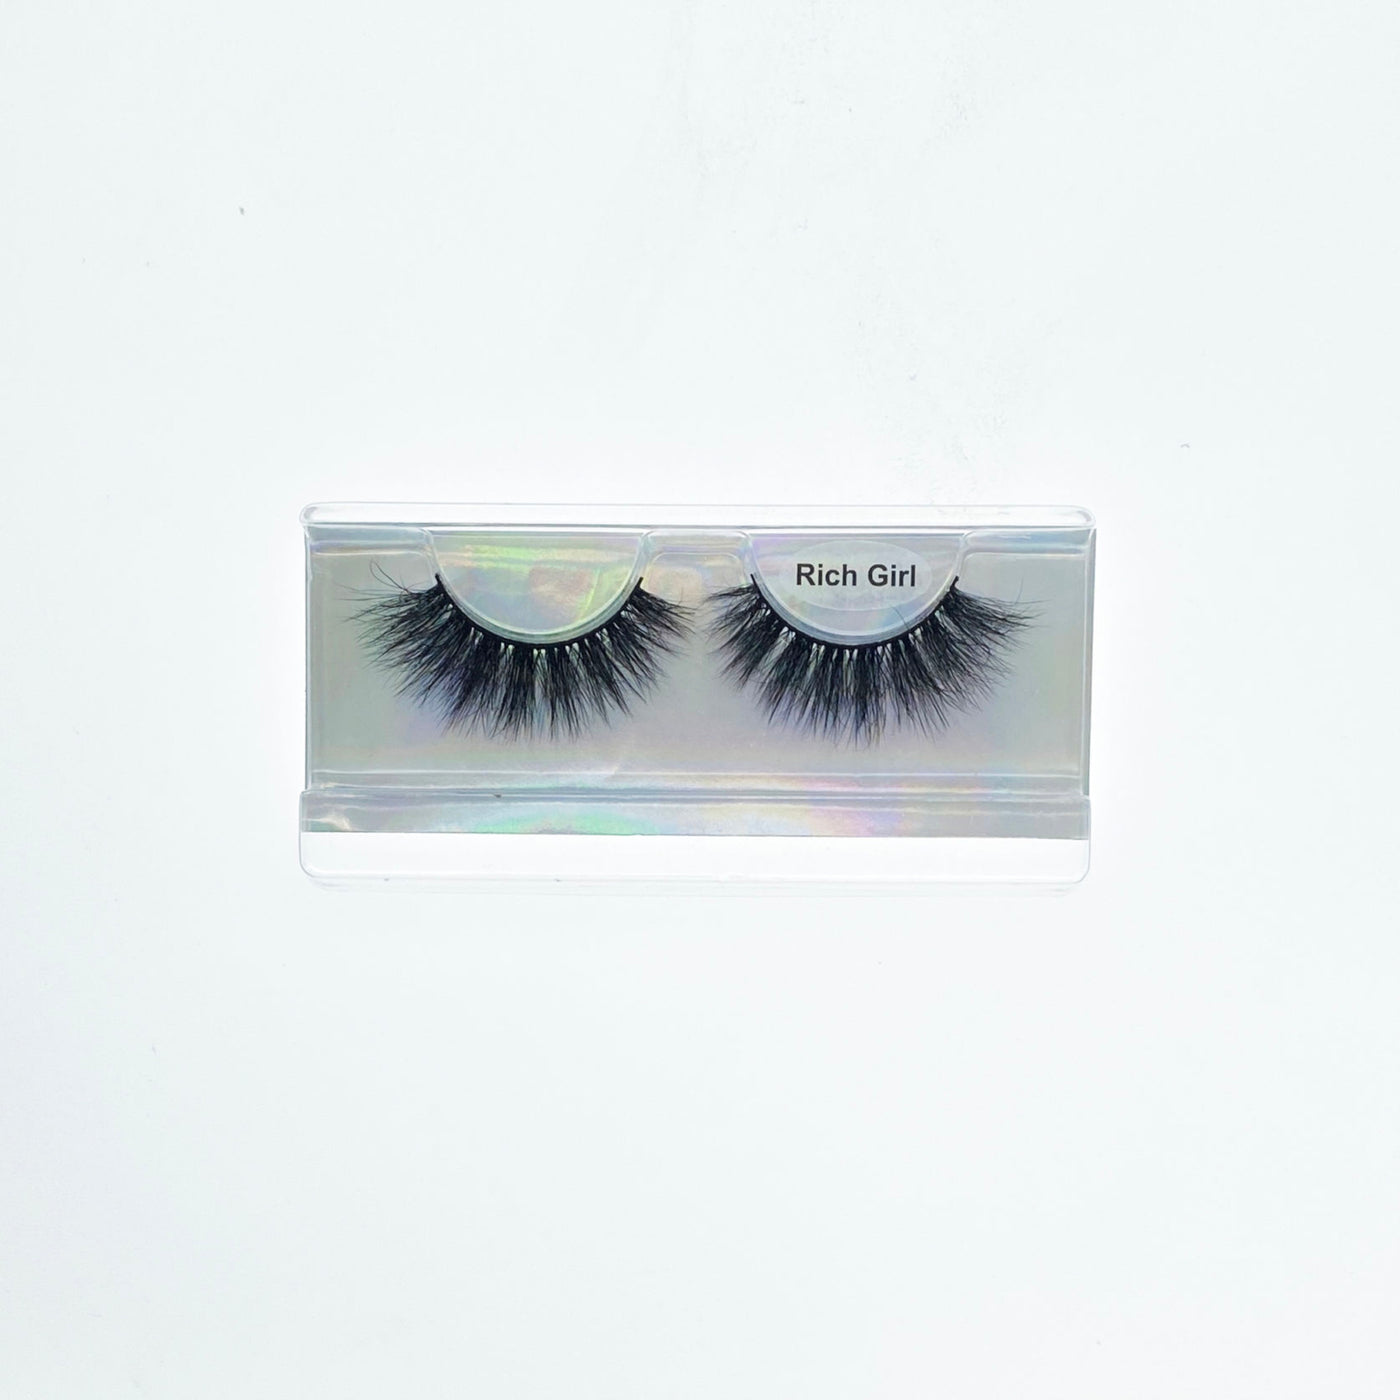 5D Luxury Mink Eyelashes - RICH GIRL - Glam Xten Collection